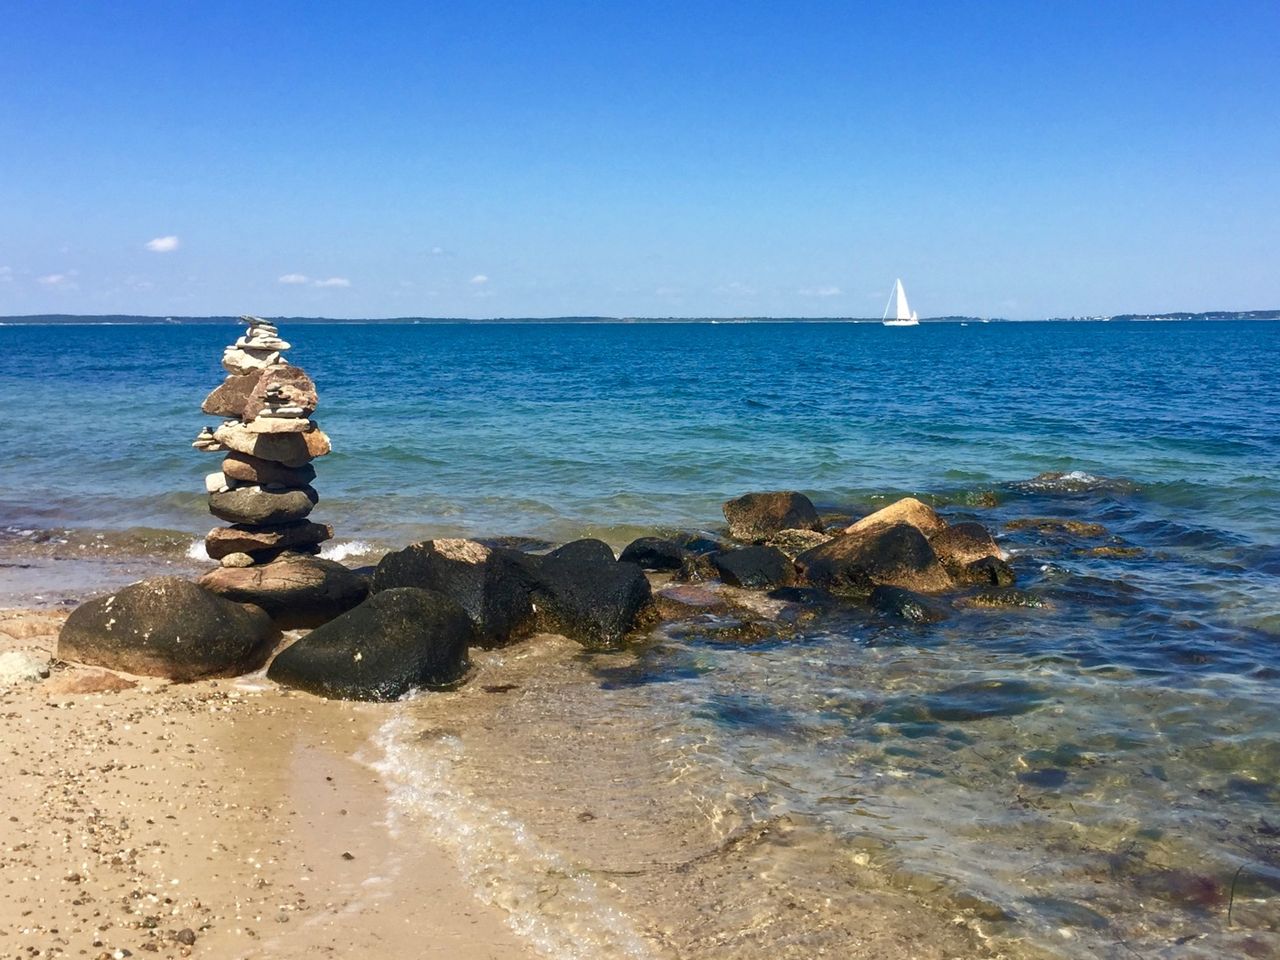 A stone totem on a beach.